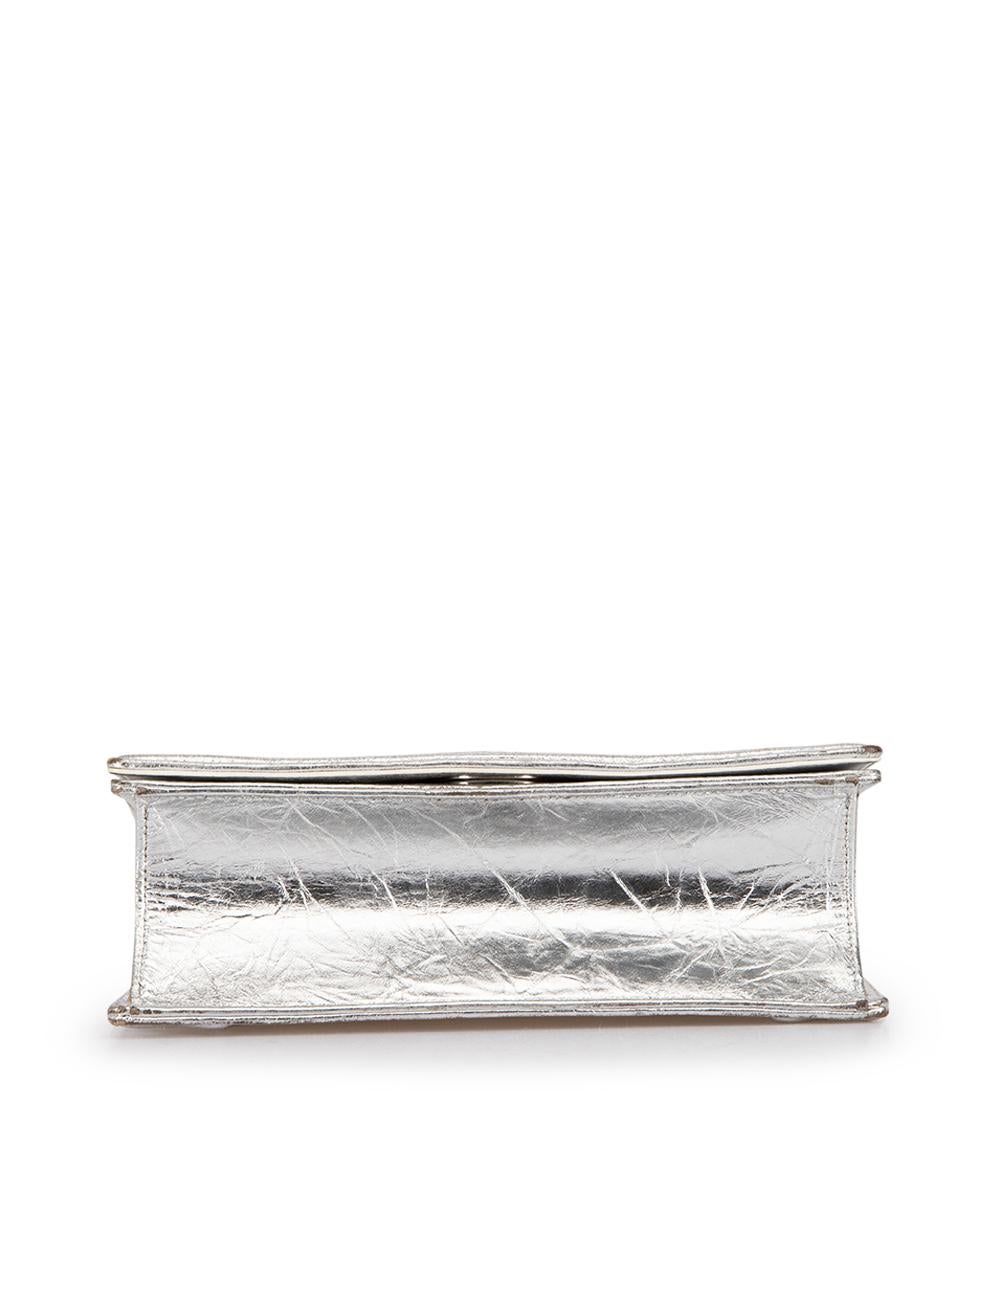 Dior Women's S/S 2016 Silver Leather Diorama Small Crossbody Bag 1